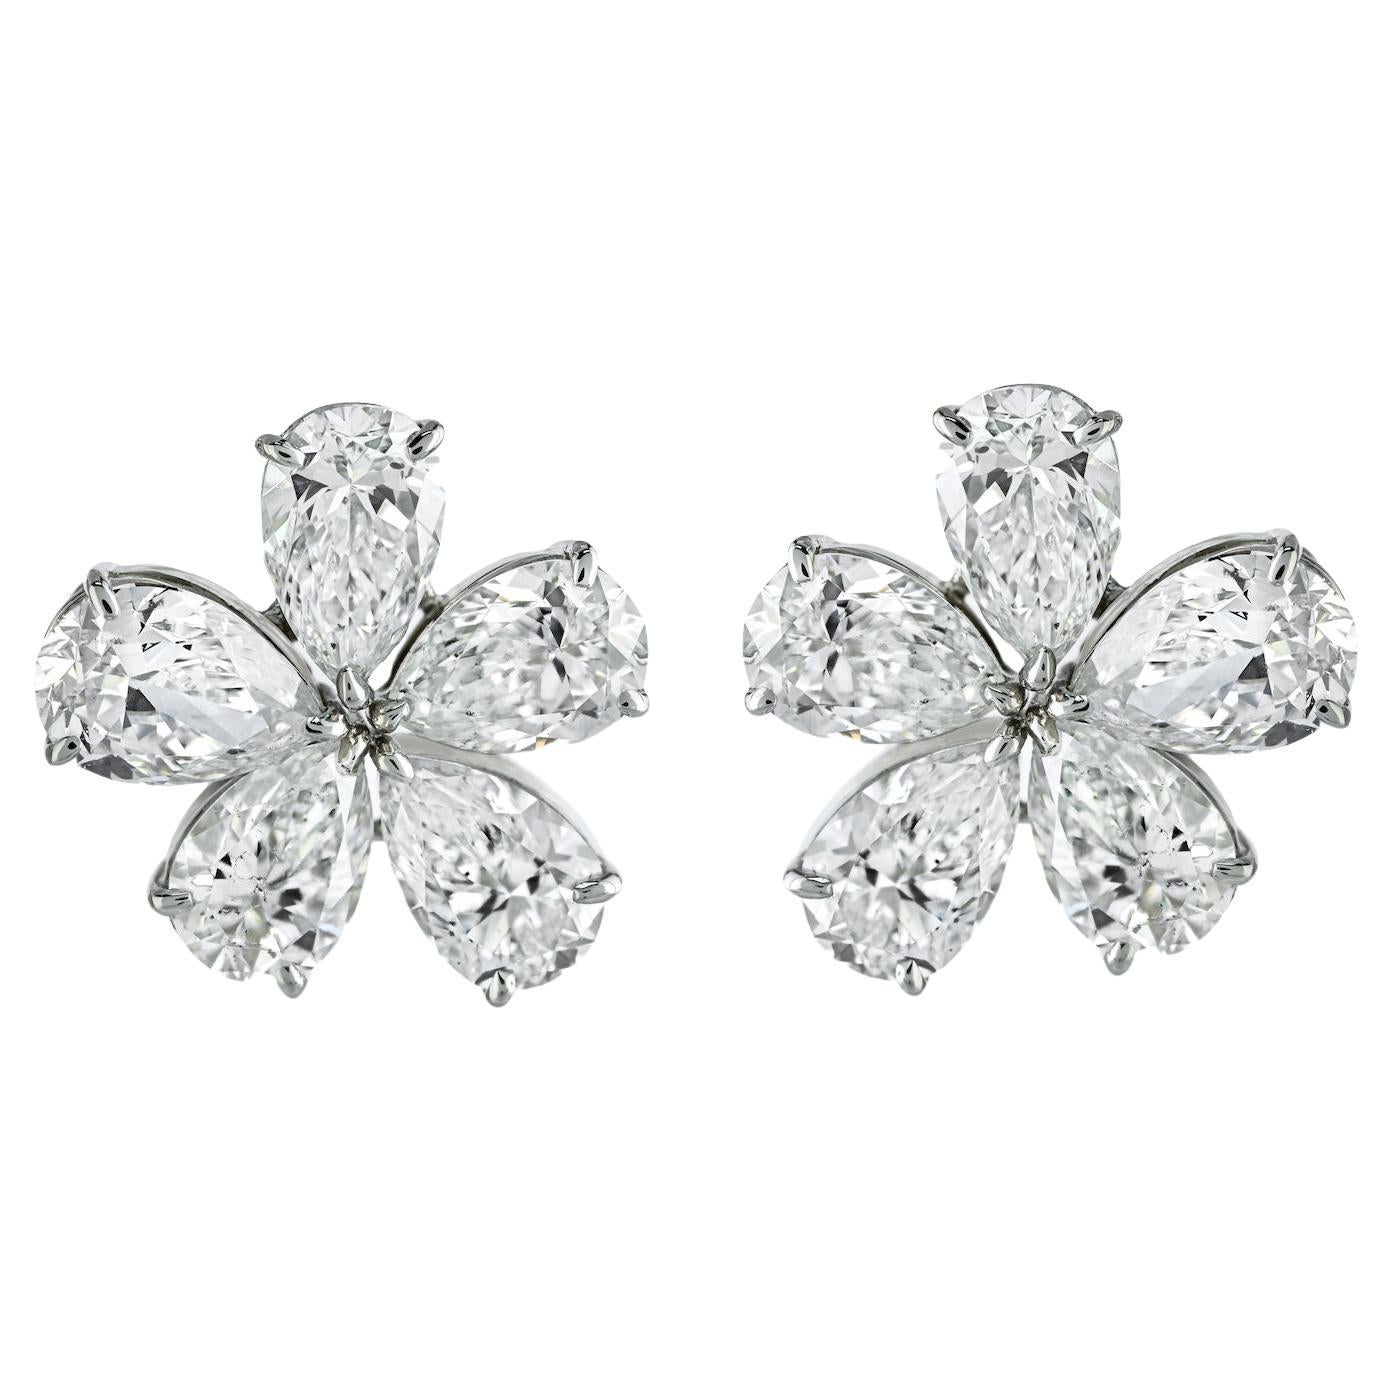 16cttw Pear Cut GIA Certified D-E color Diamond Flower Stud Earrings